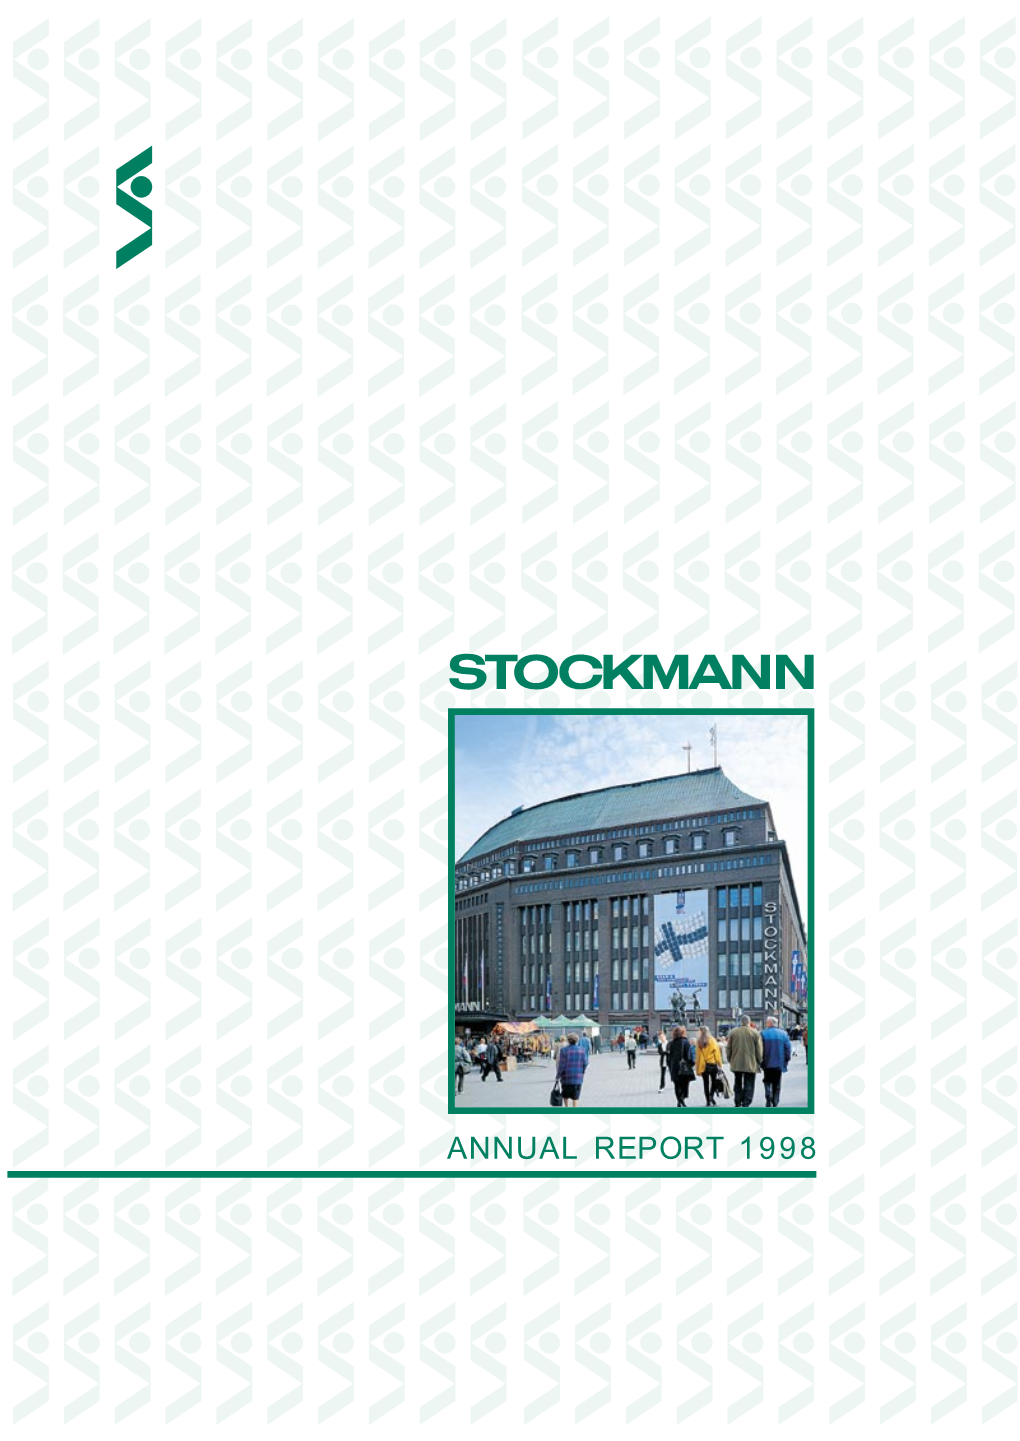 Stockmann in 1998